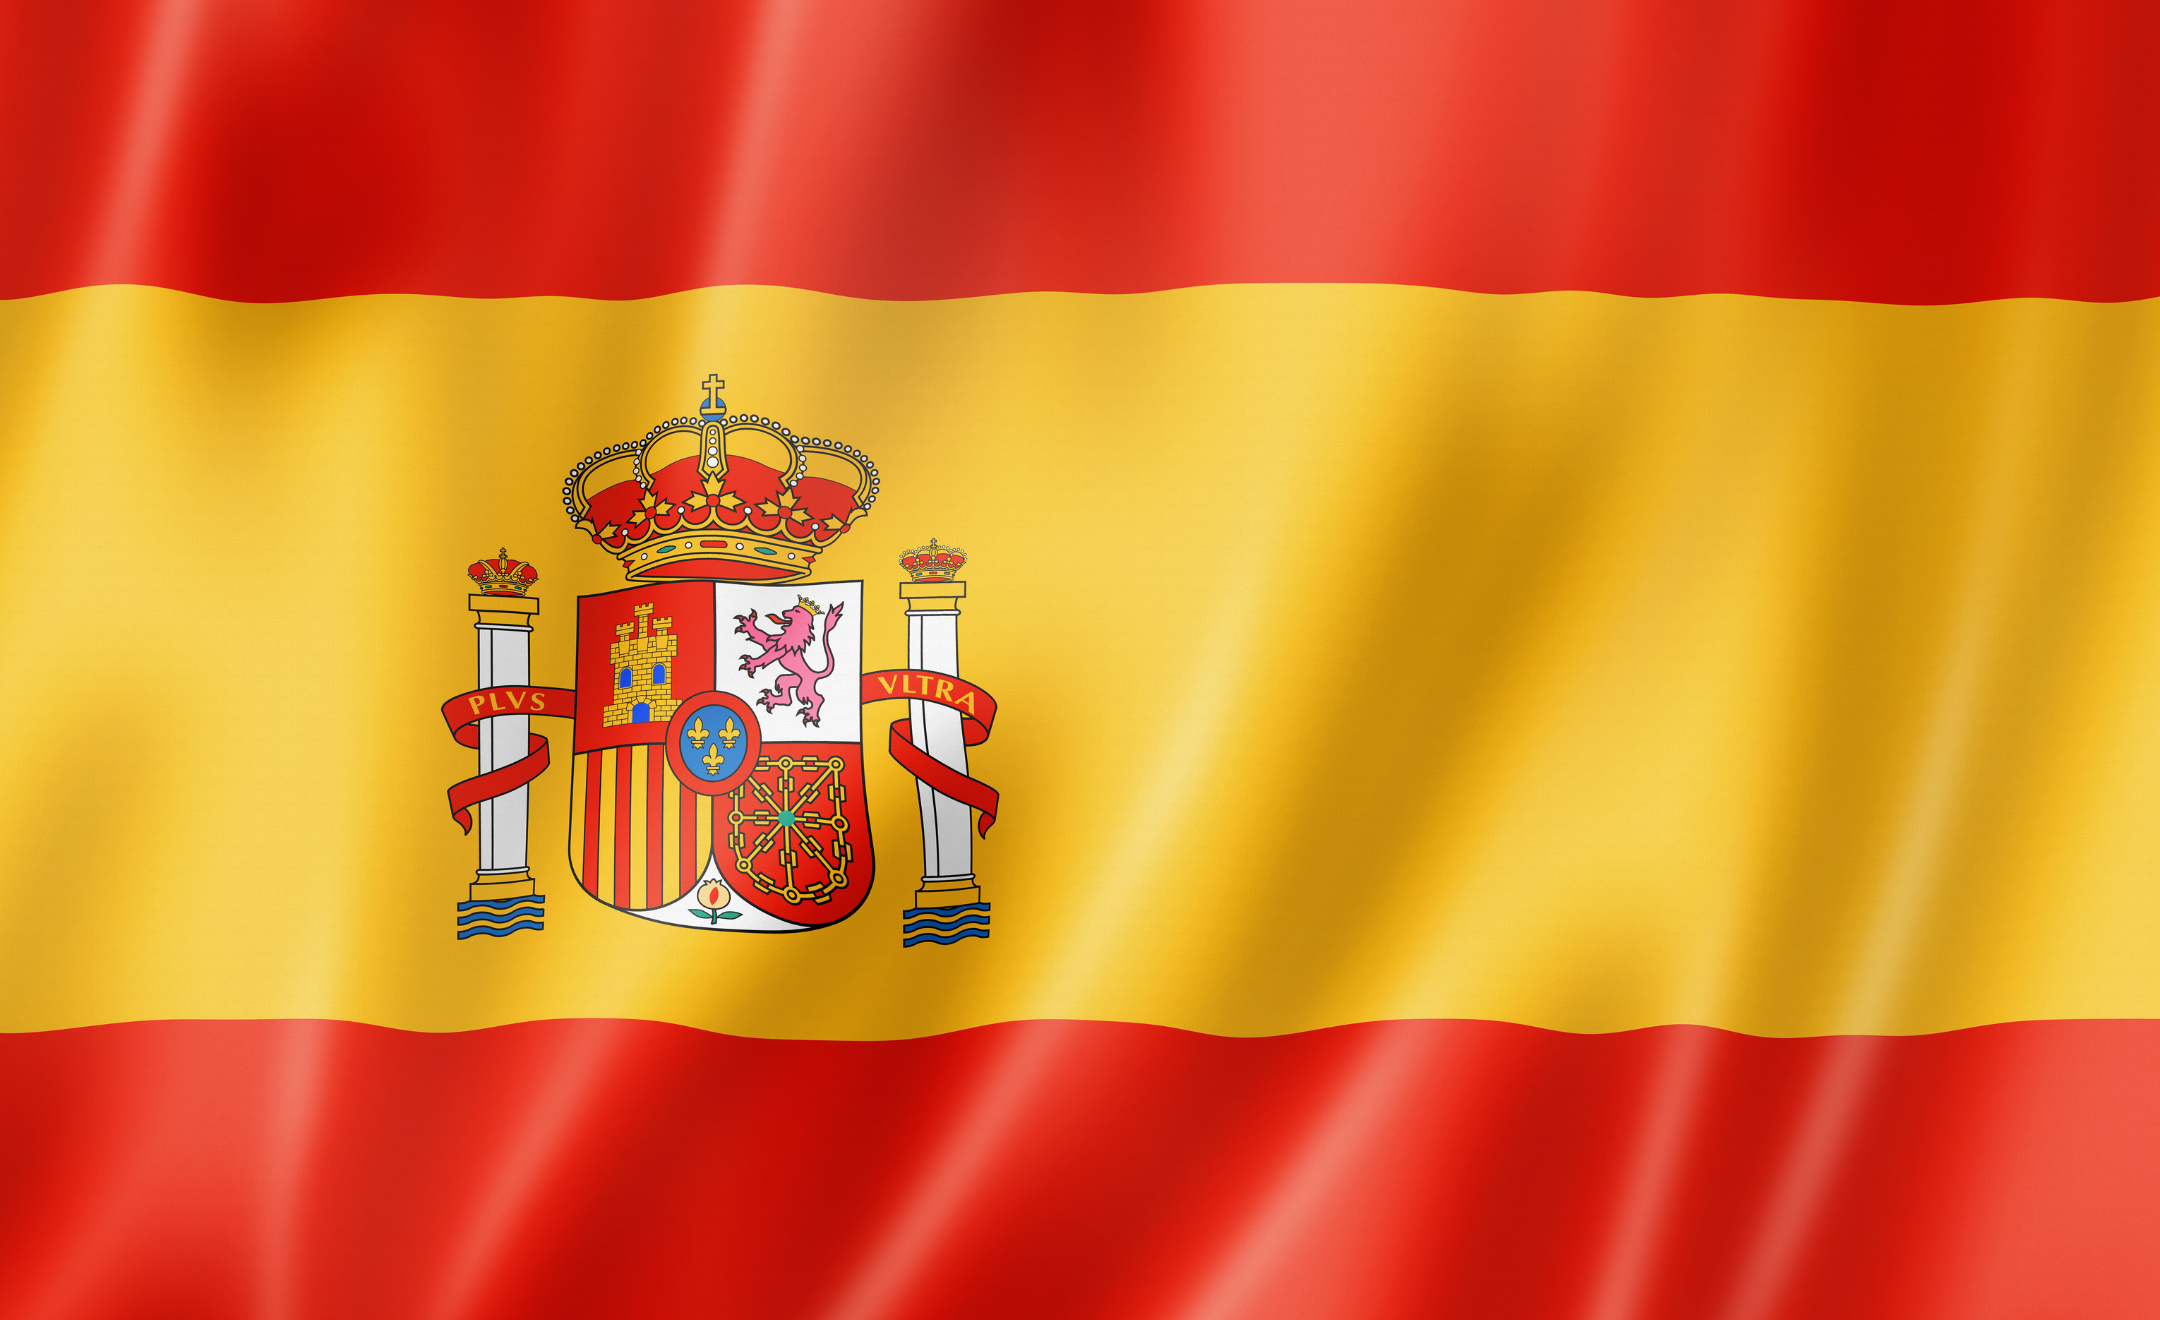 Image of the Spanish flag